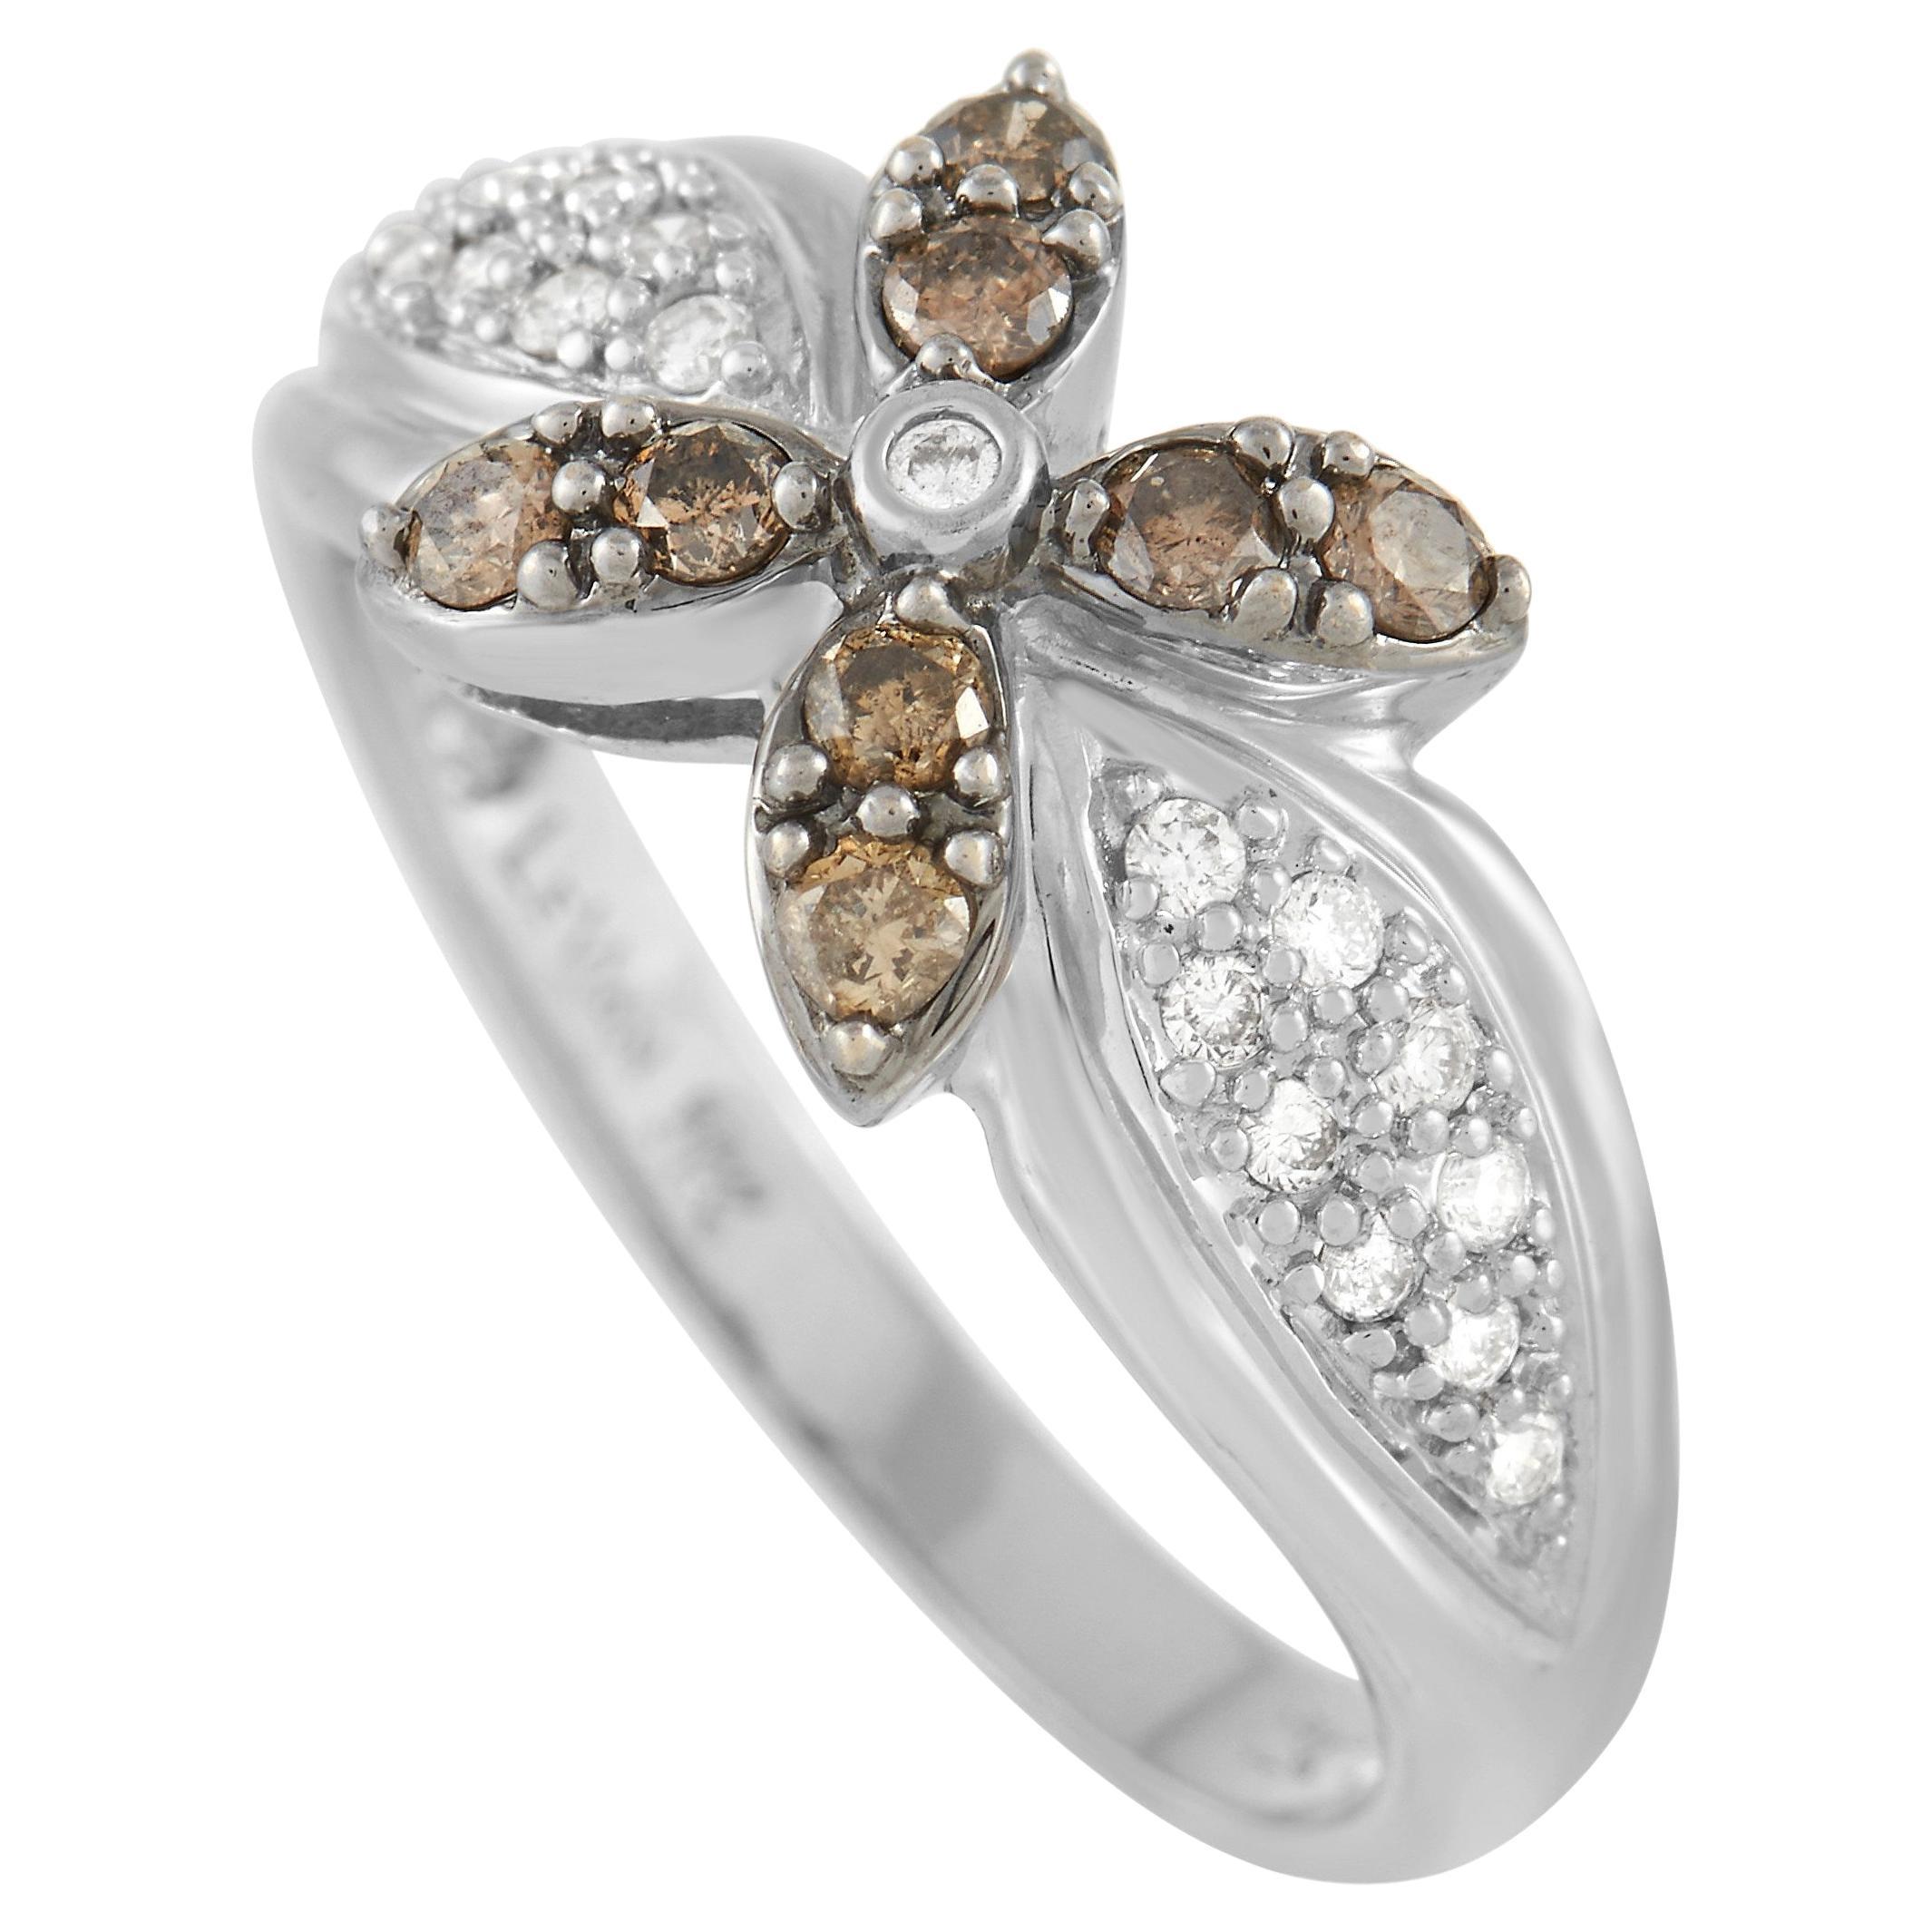 Le Vian 18K White Gold White and Brown Diamond Flower Ring